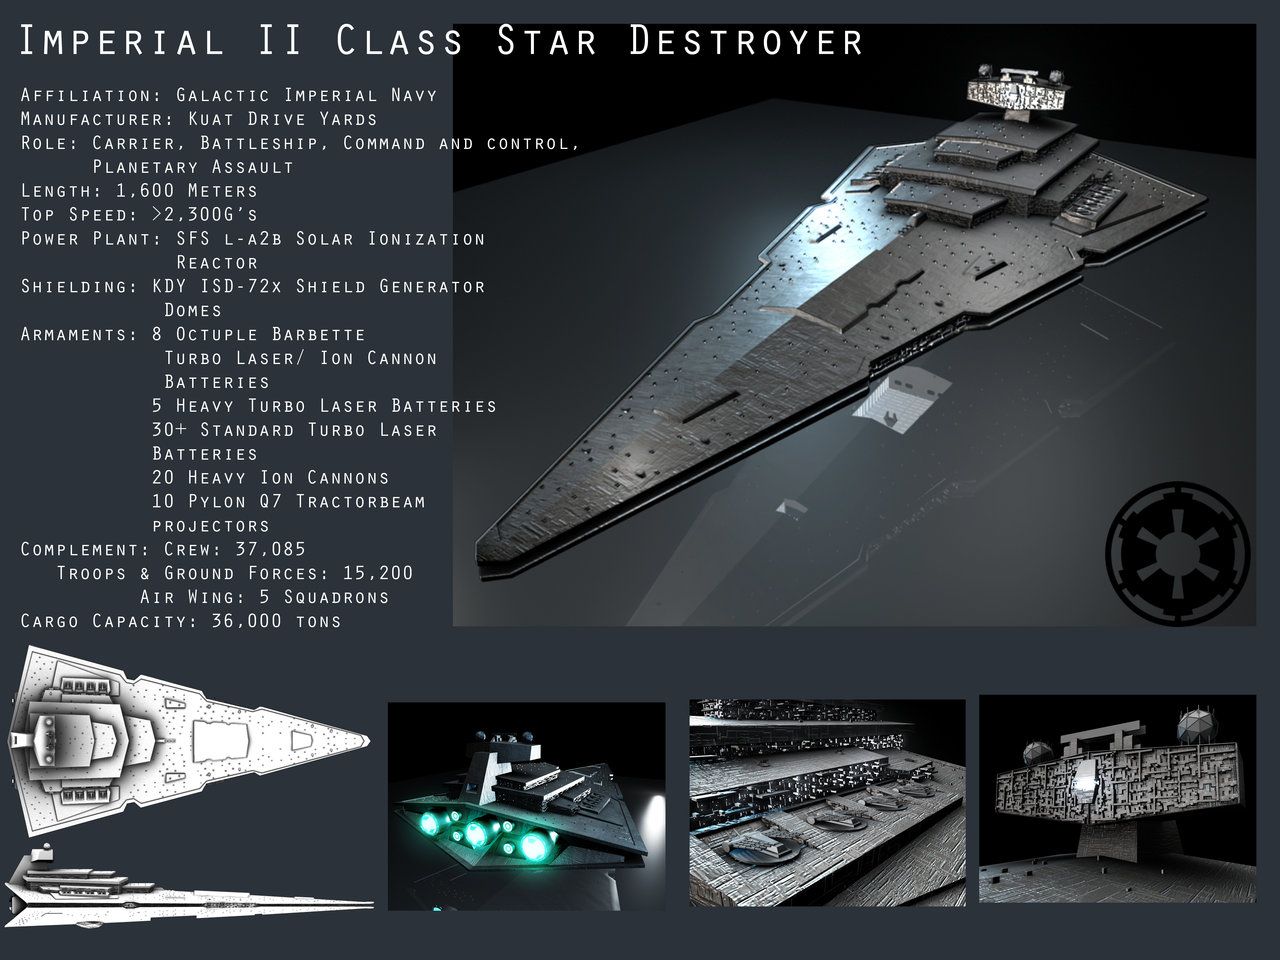 Executor Class Star Destroyer By Davis 237834